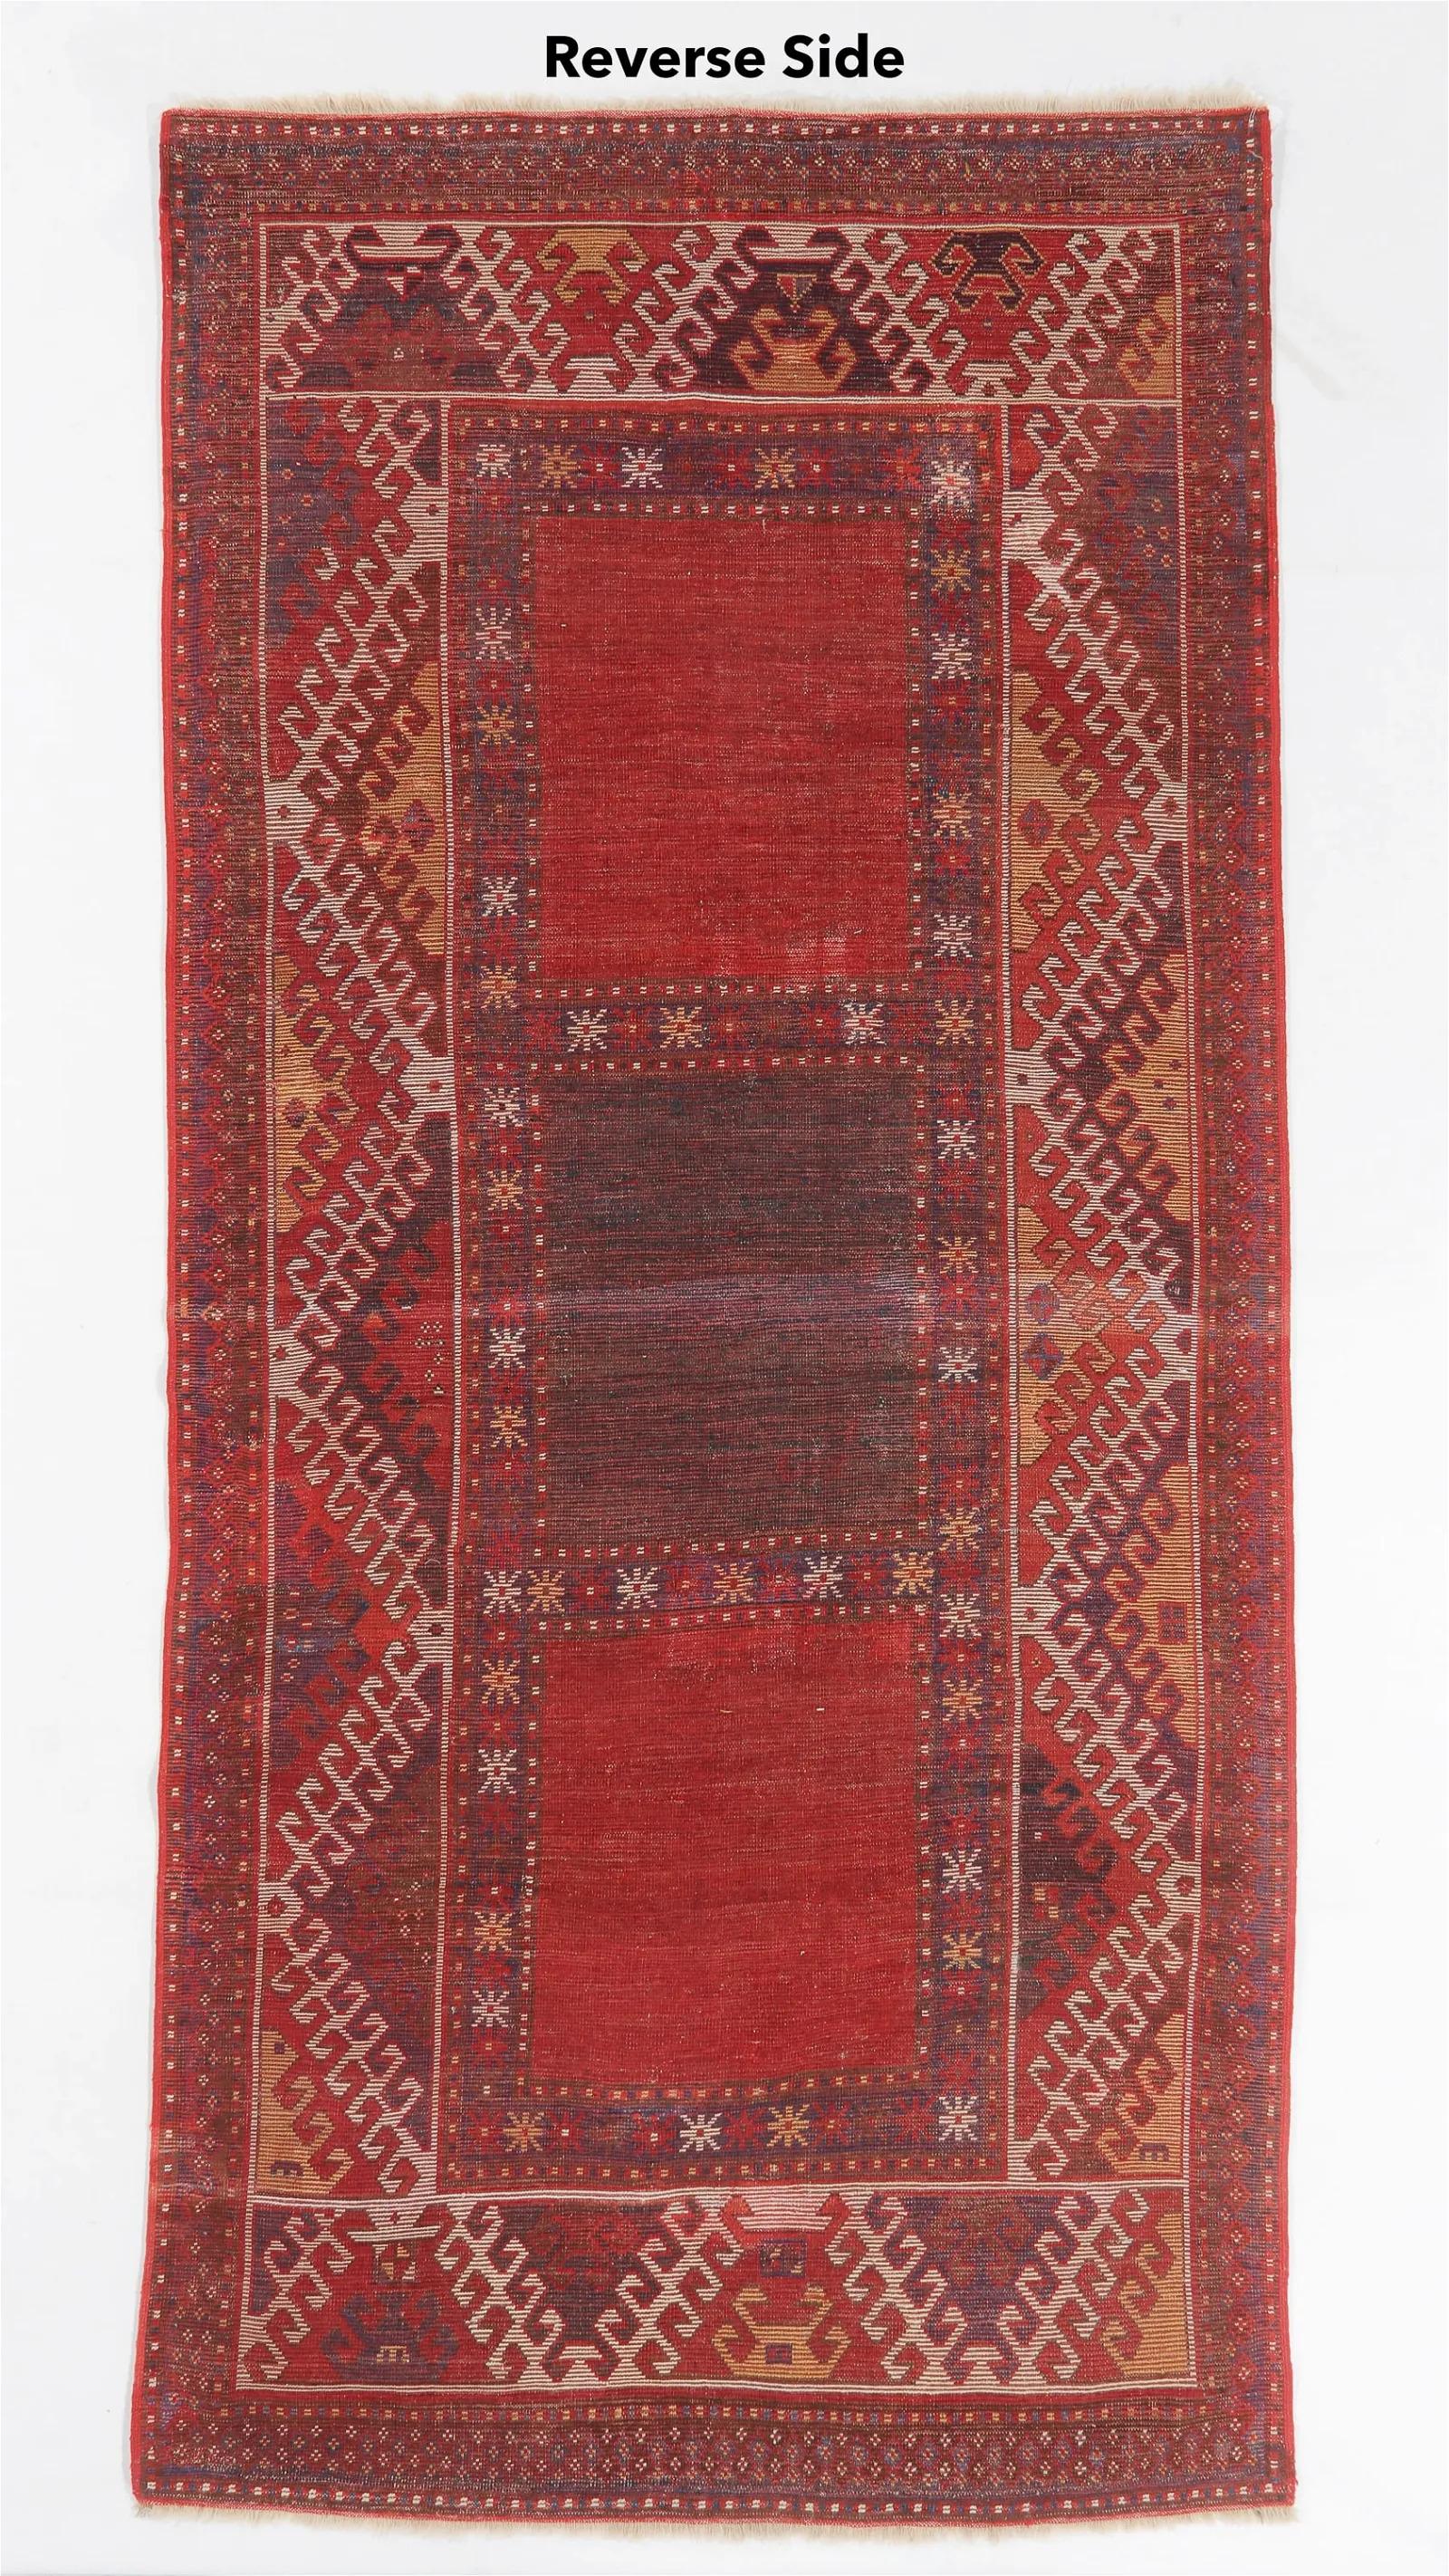 Early 20th Century Handmade Antique Caucasian Borjalu Kazak Rug 4.3' x 8.11', 1900s - 2B26 For Sale